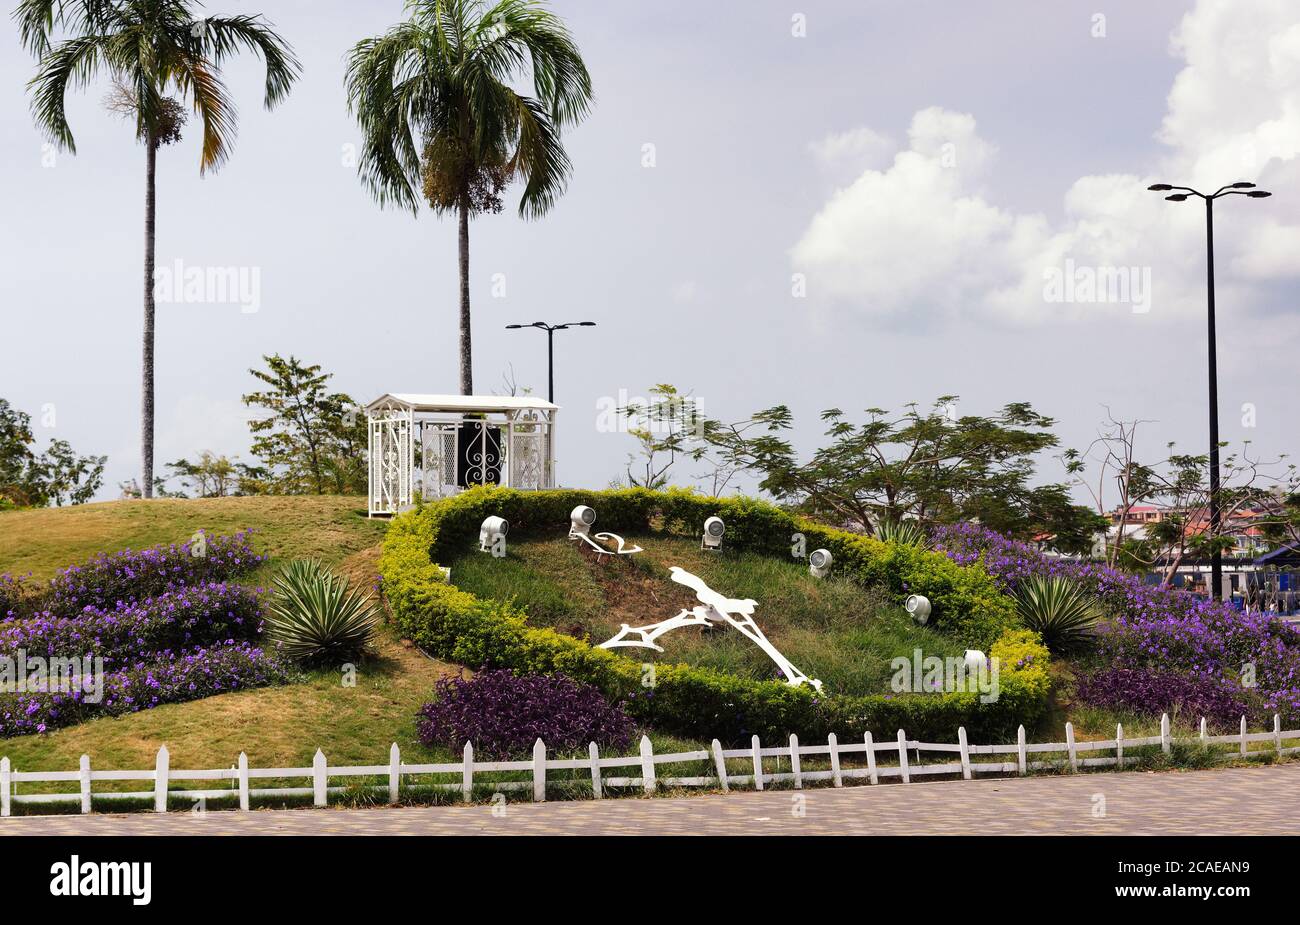 Floral clock sculpture set at 8:30 along the Mirador, Panama City, Central america Stock Photo